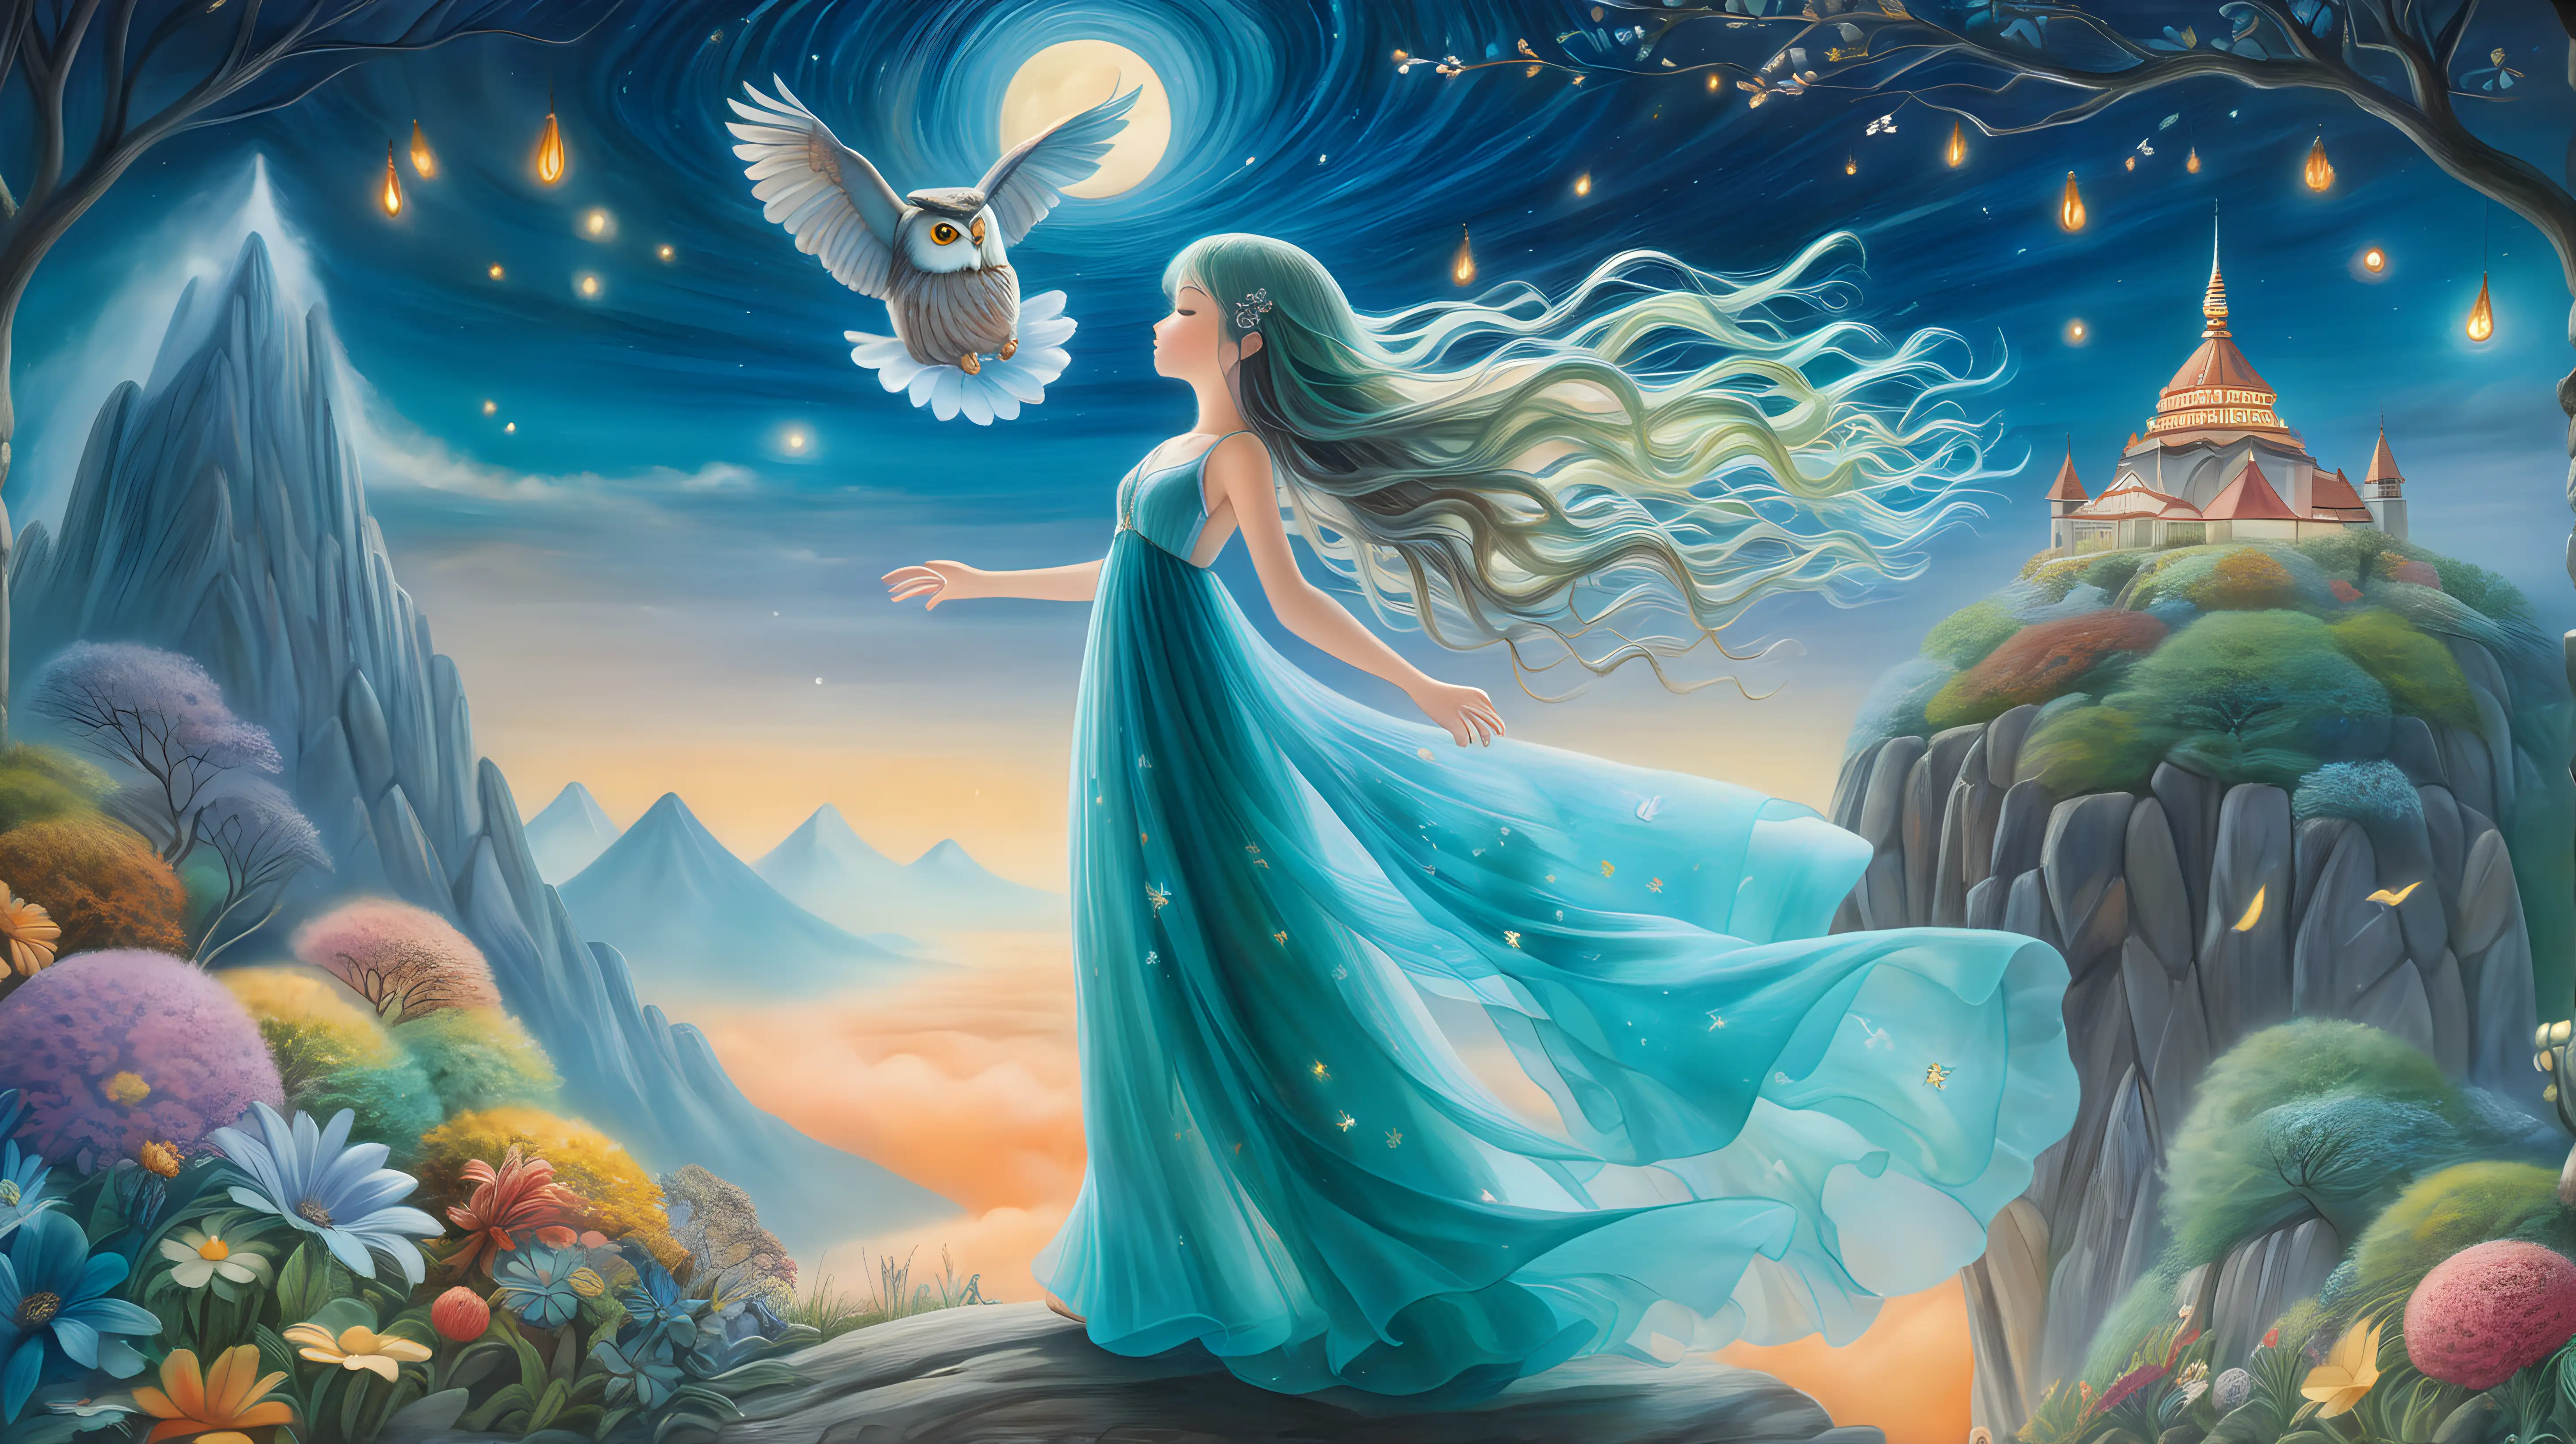 Enchanting GhibliInspired Diorama Ethereal Owl Princess in Moonlit Forest